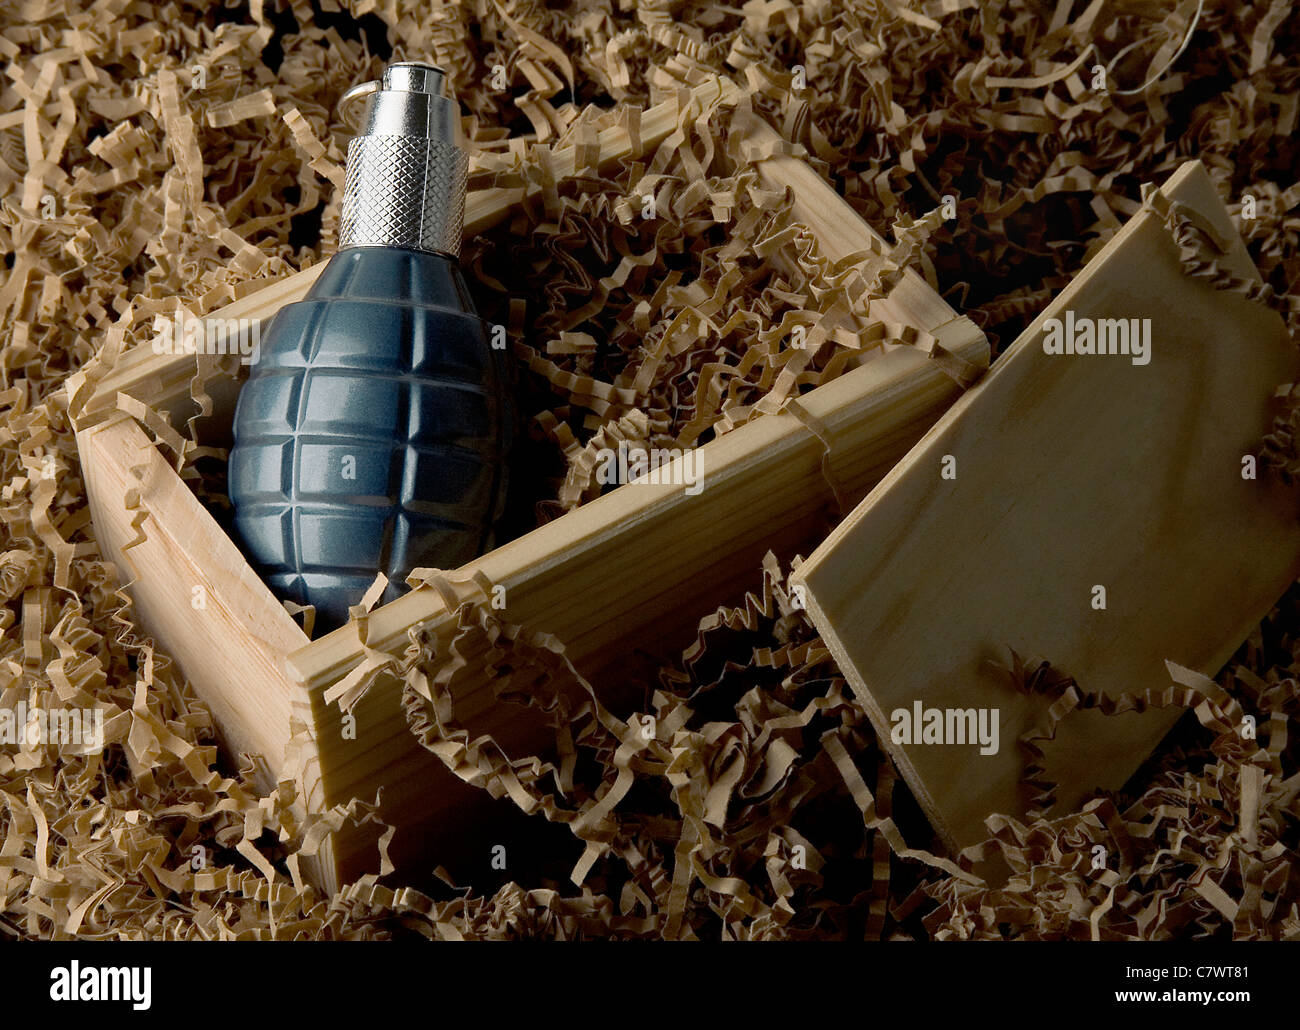 Grenade in packaging. Stock Photo